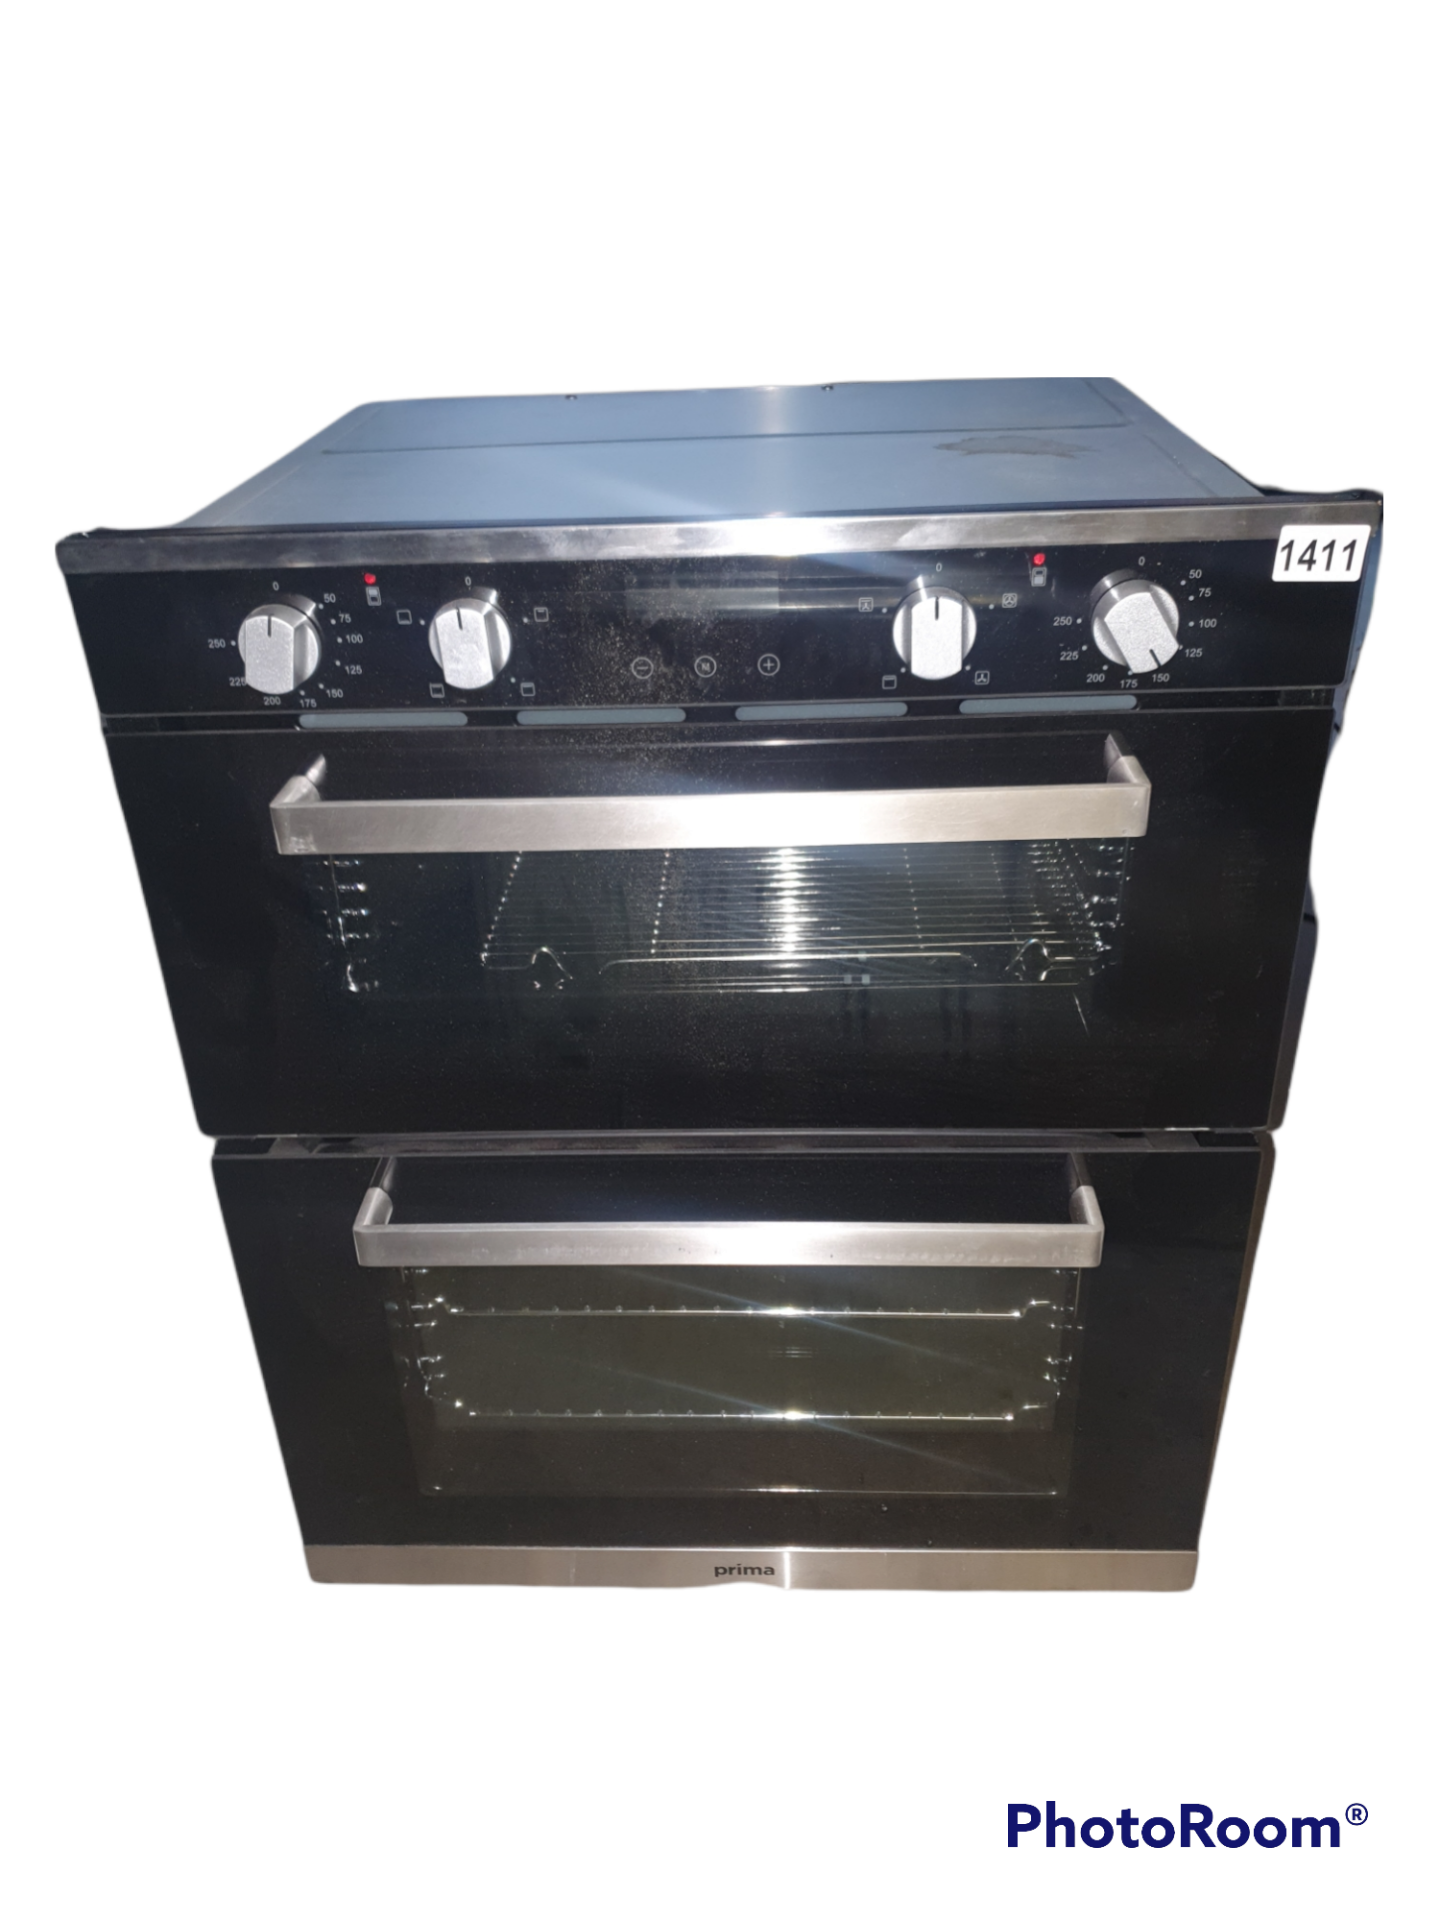 Prima+ Built-under Double Electric Oven - PRDO304 RRP £460